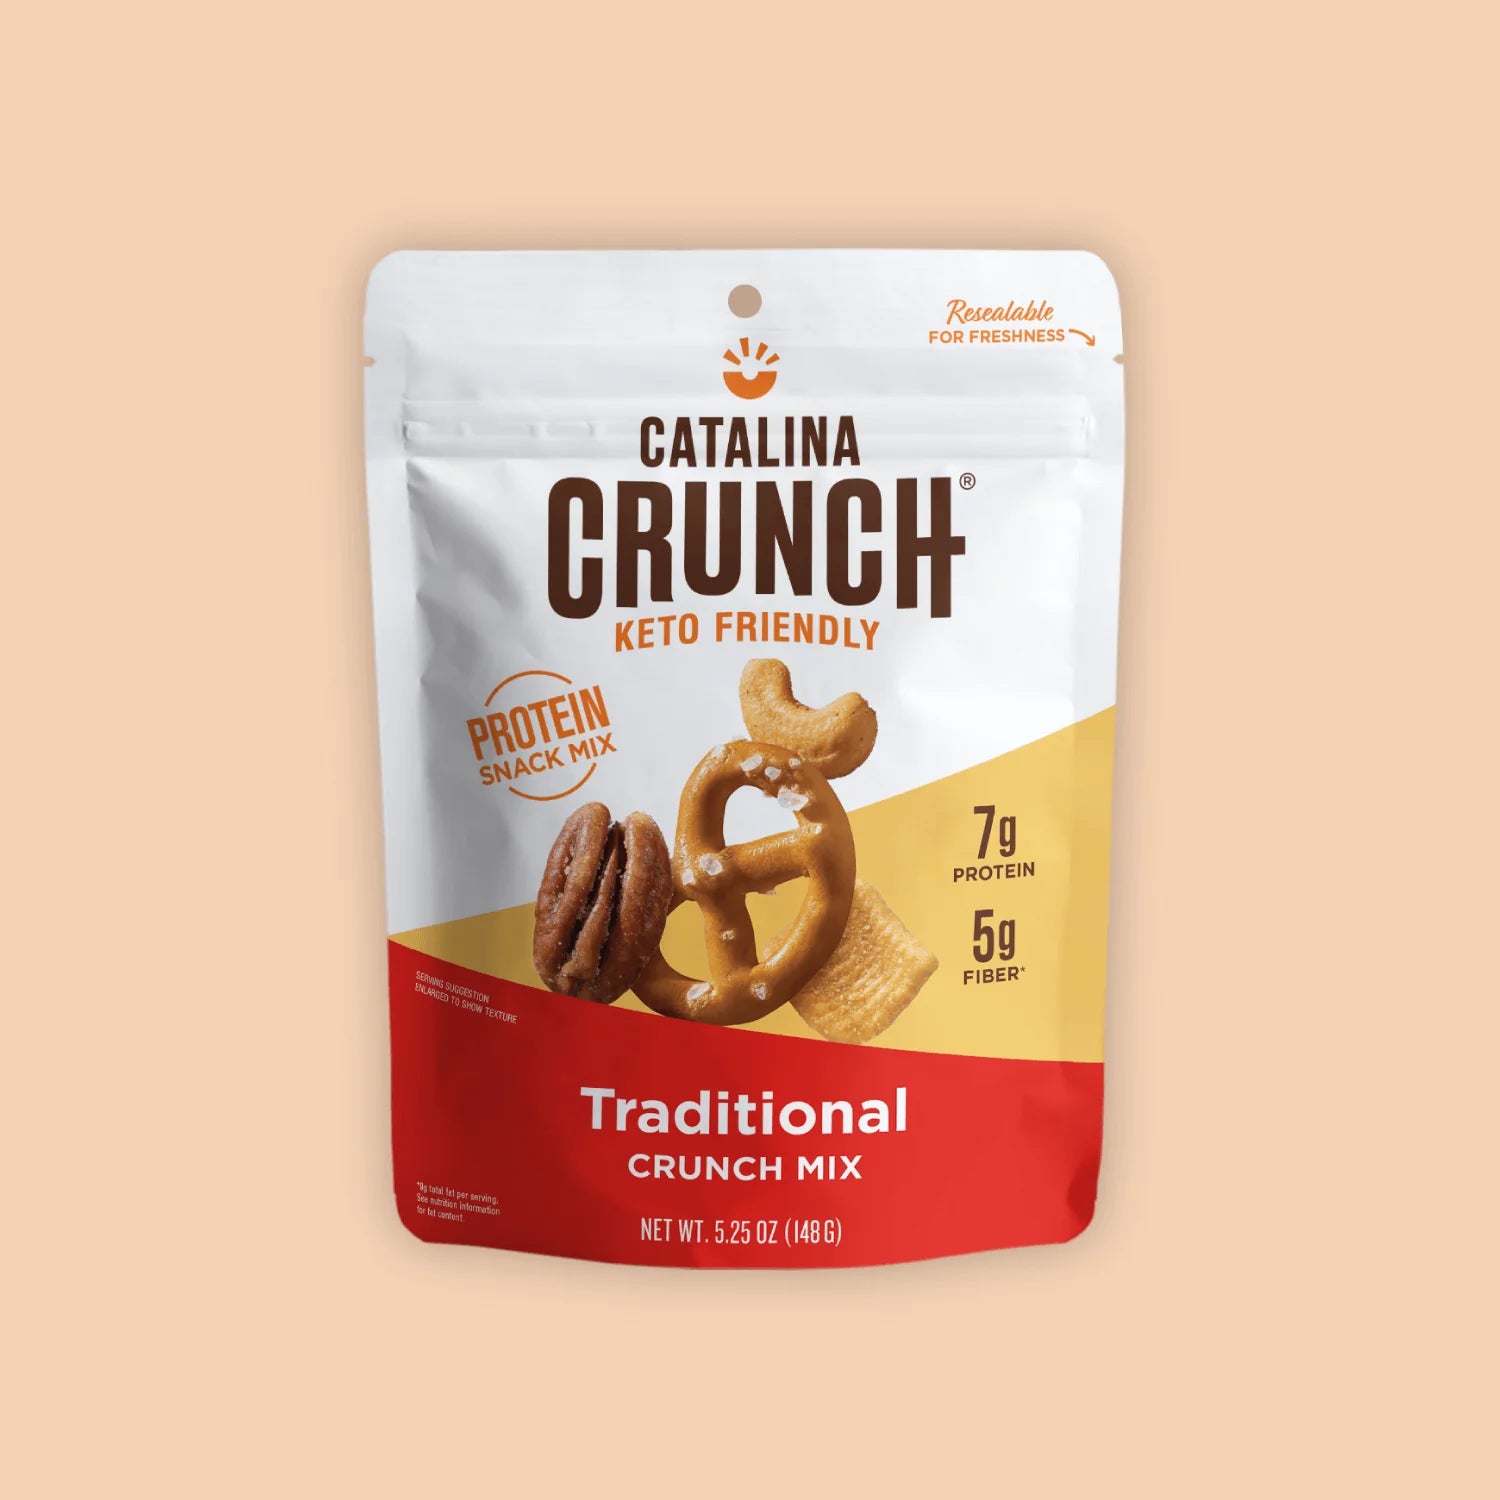 Catalina Crunch Snack Crunch Mix (1 bag) catalina-crunch-snack-crunch-mix-1-bag Traditional Catalina Crunch